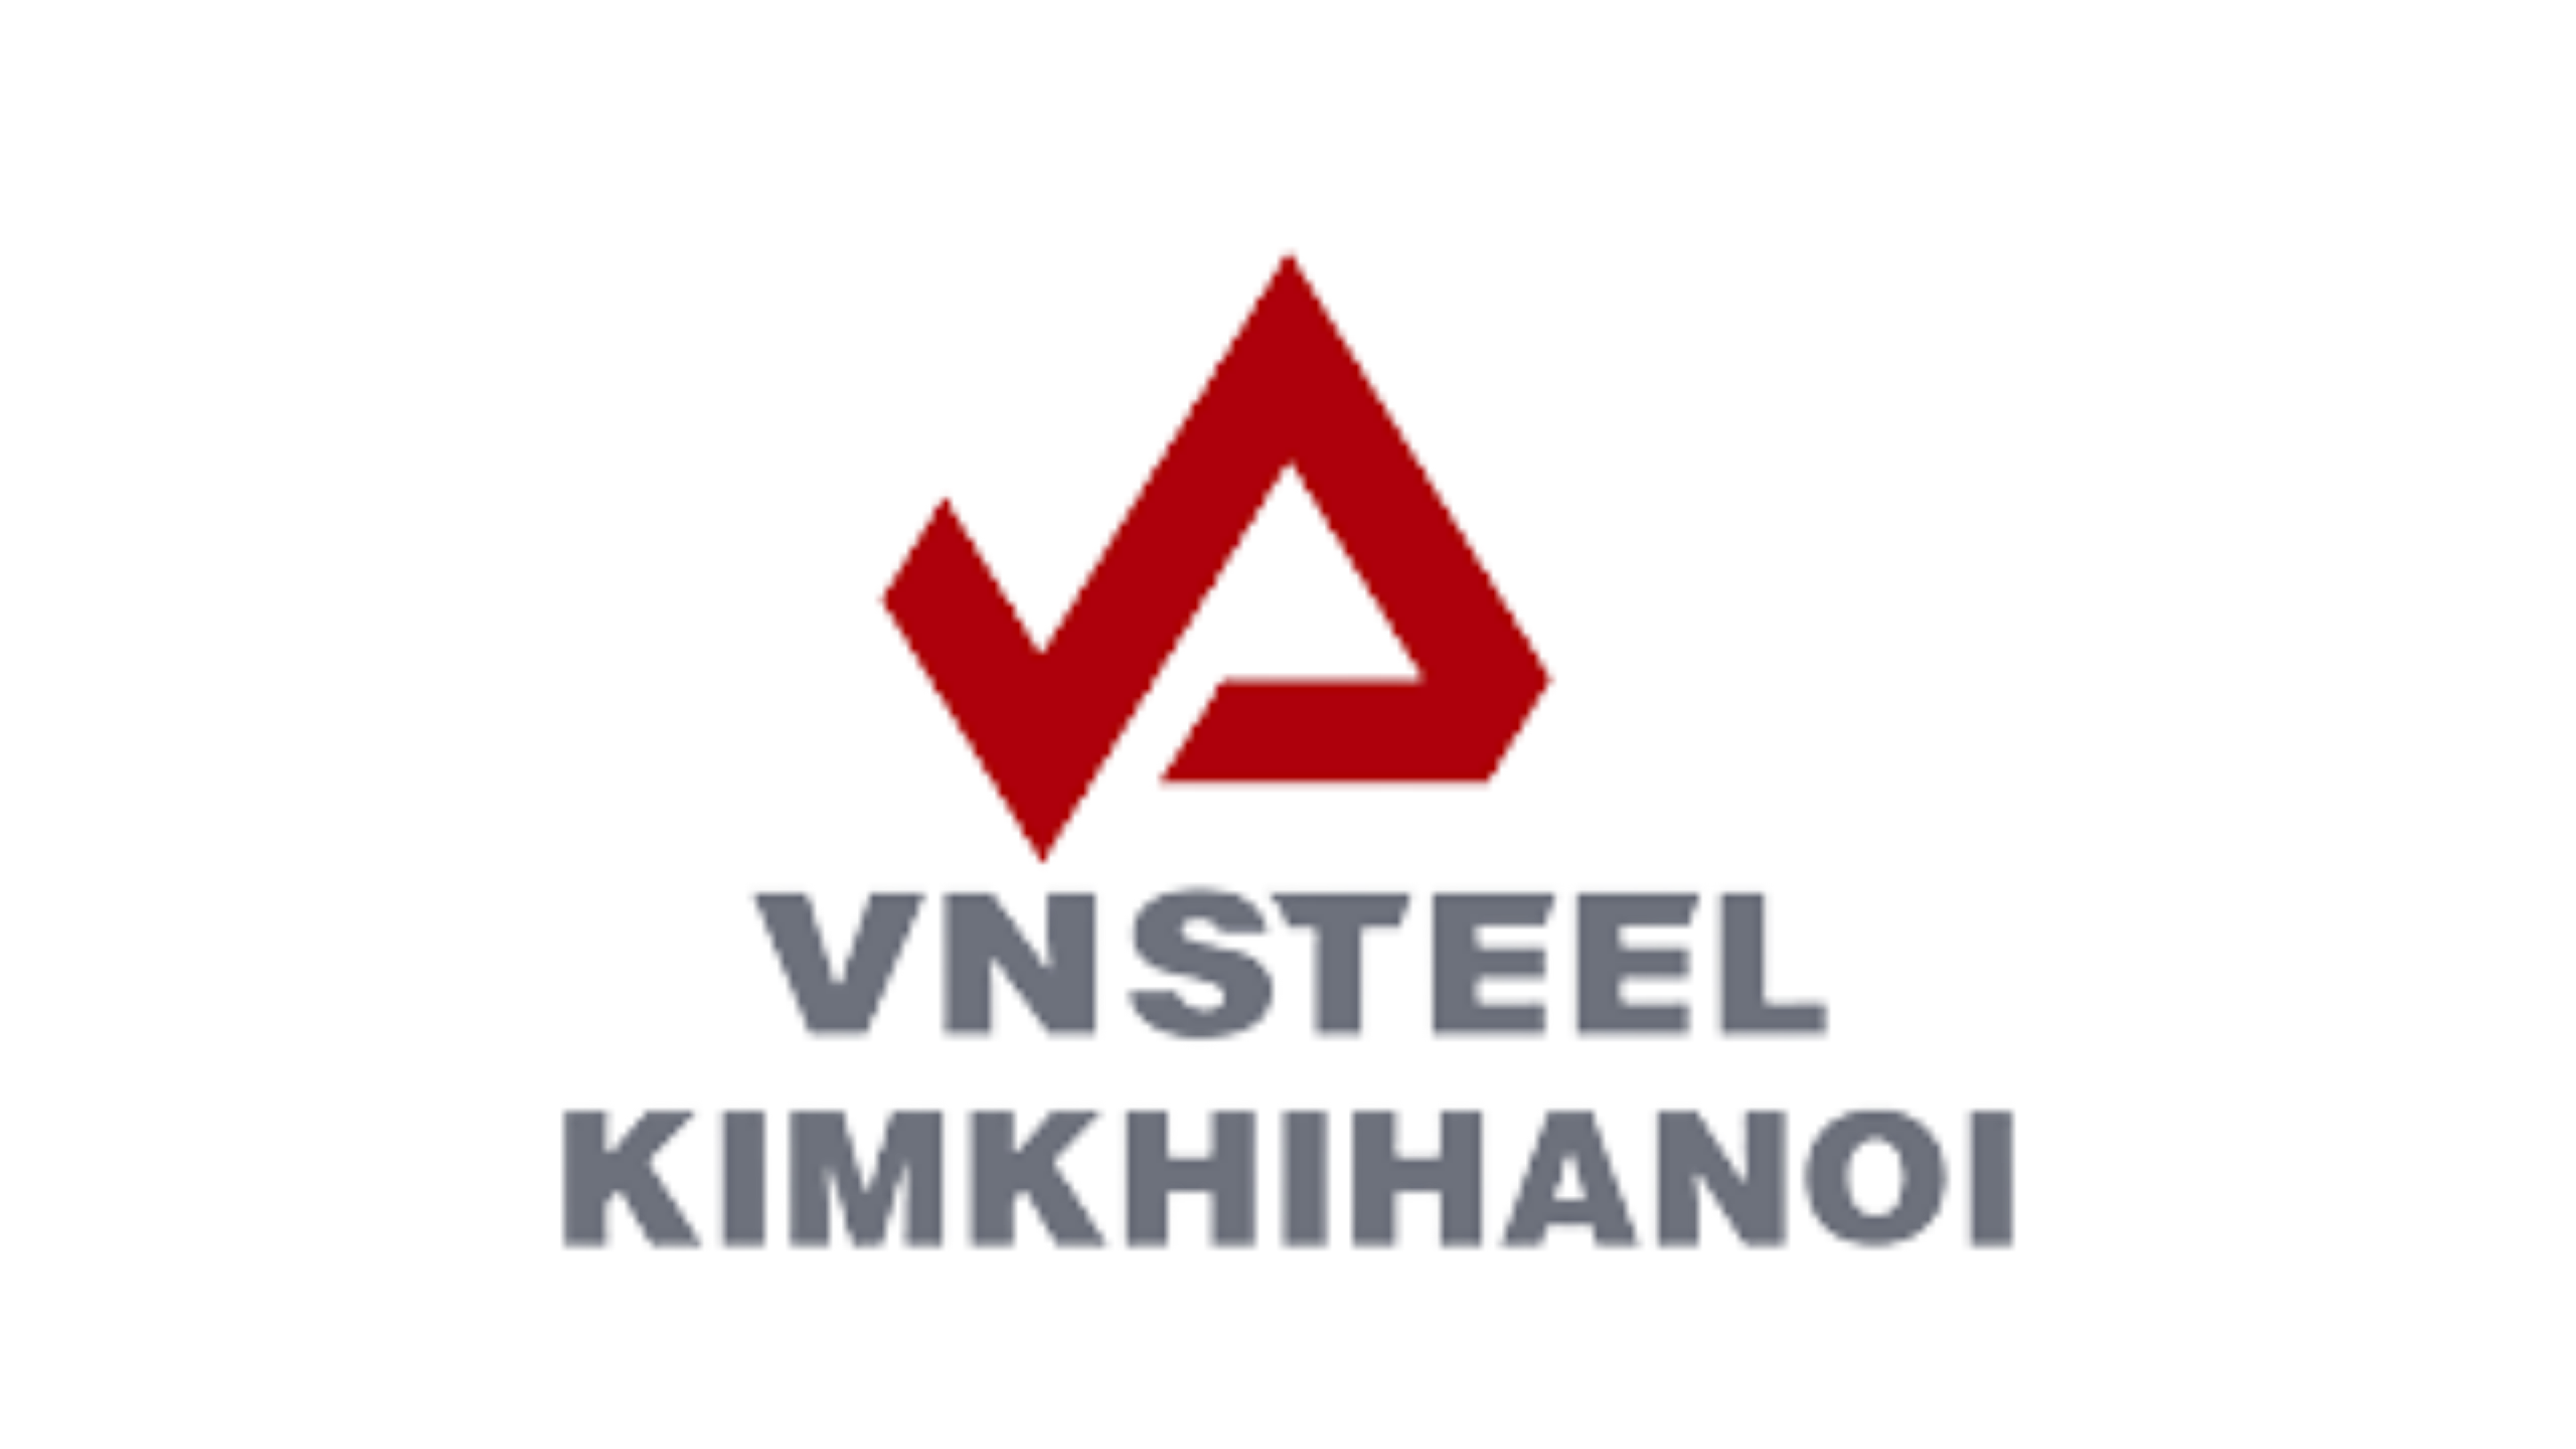 VNSTEEL - HANOI STEEL CORPORATION